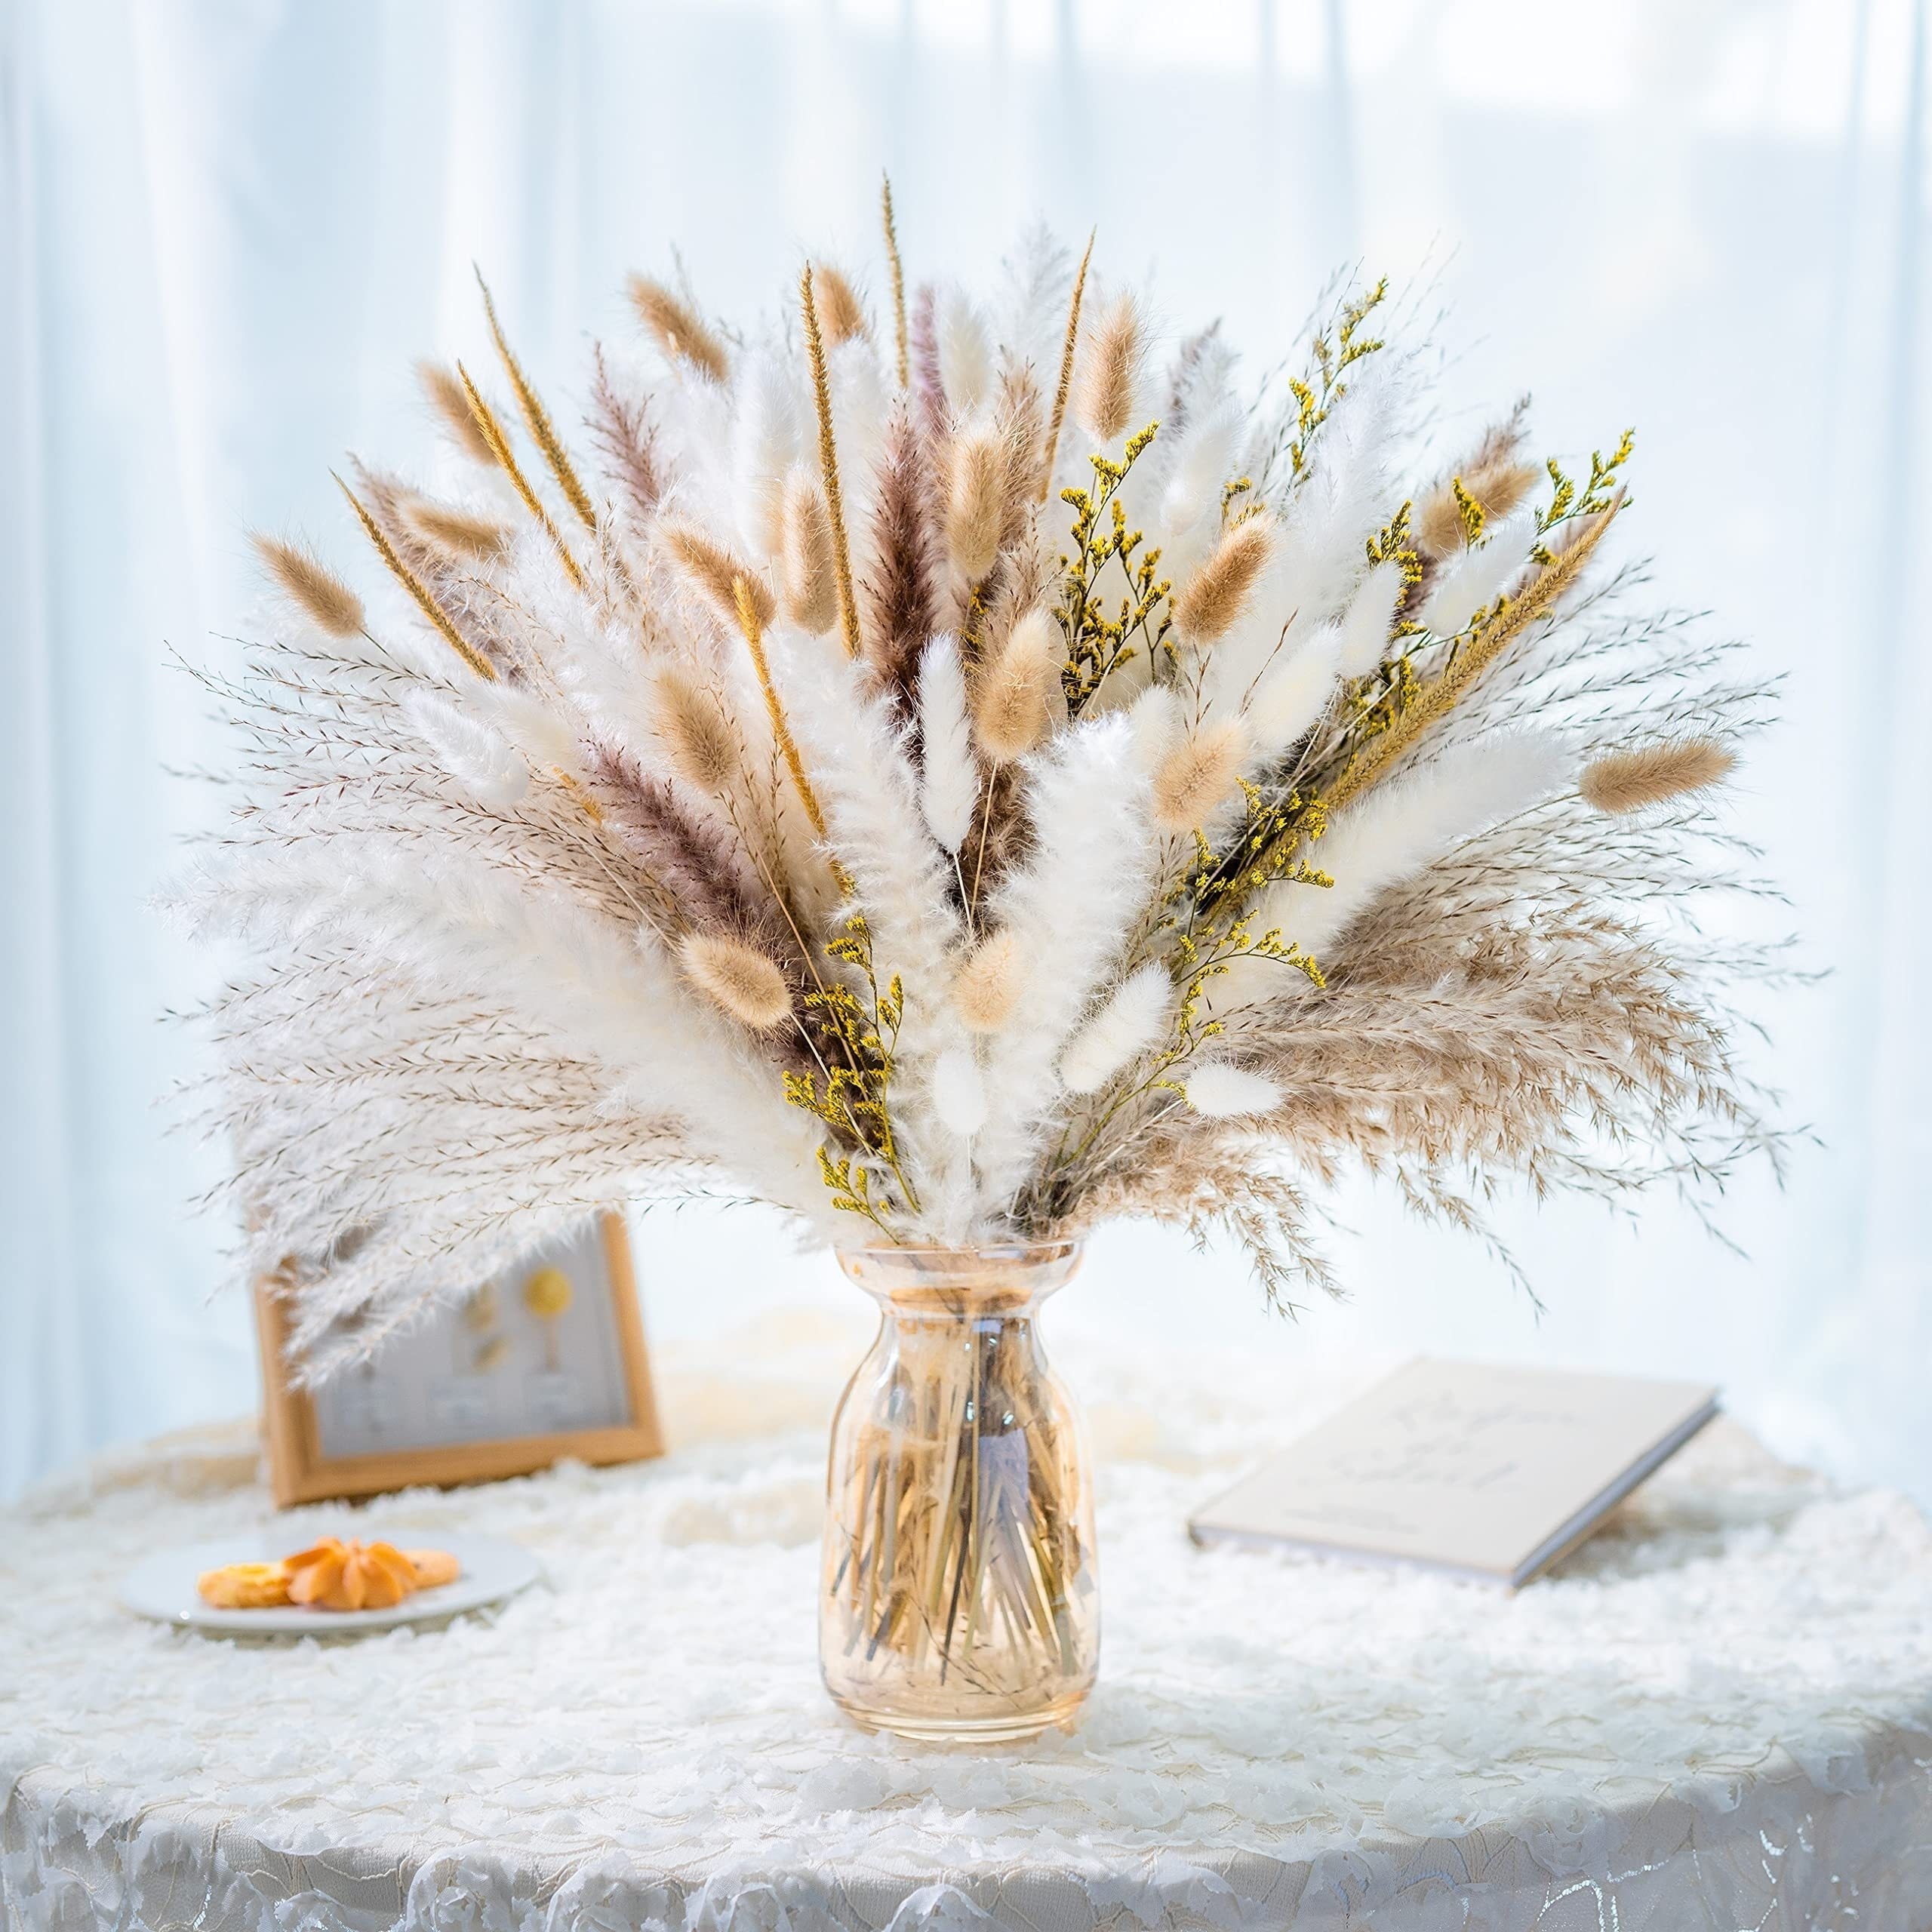 Dried Flowers with Stems Artificial Golden Wheat Bouquet 100pcs Natural  Flowers for Fall DIY Arrangement Decorative Farmhouse - AliExpress